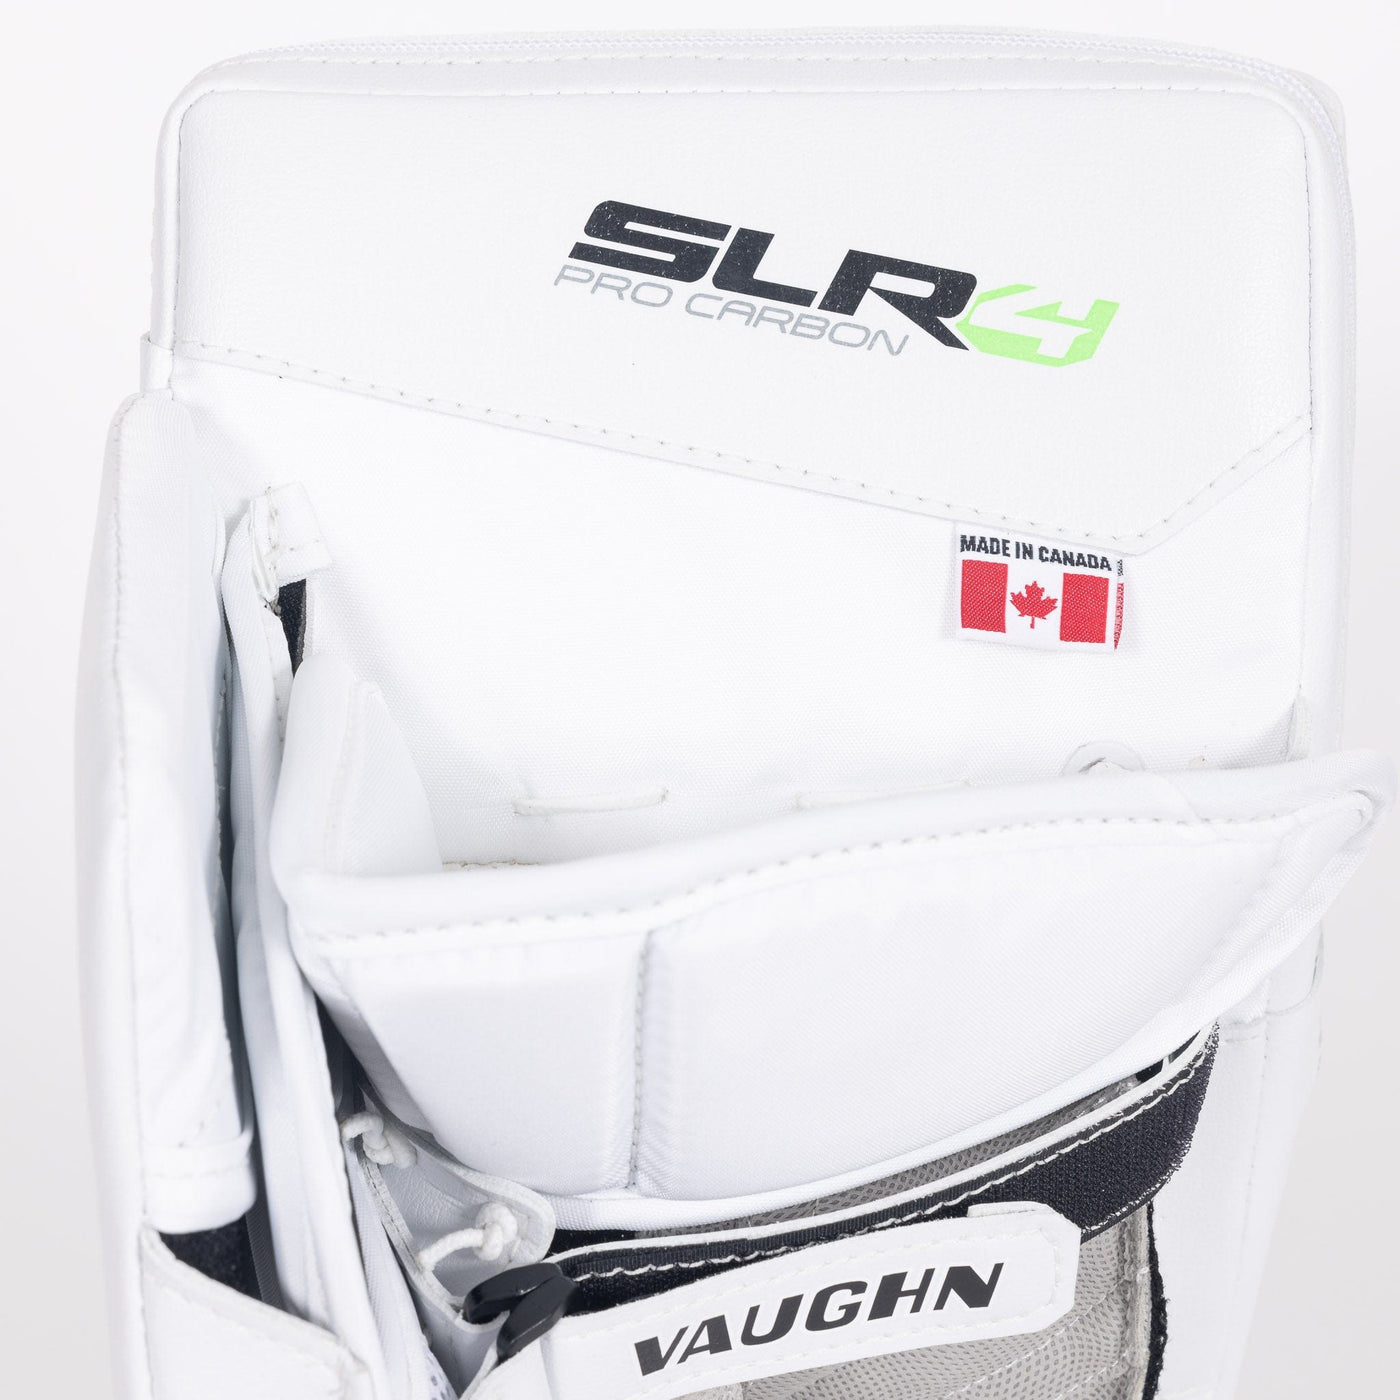 Vaughn Ventus SLR4 Pro Carbon Senior Goalie Blocker - TheHockeyShop.com